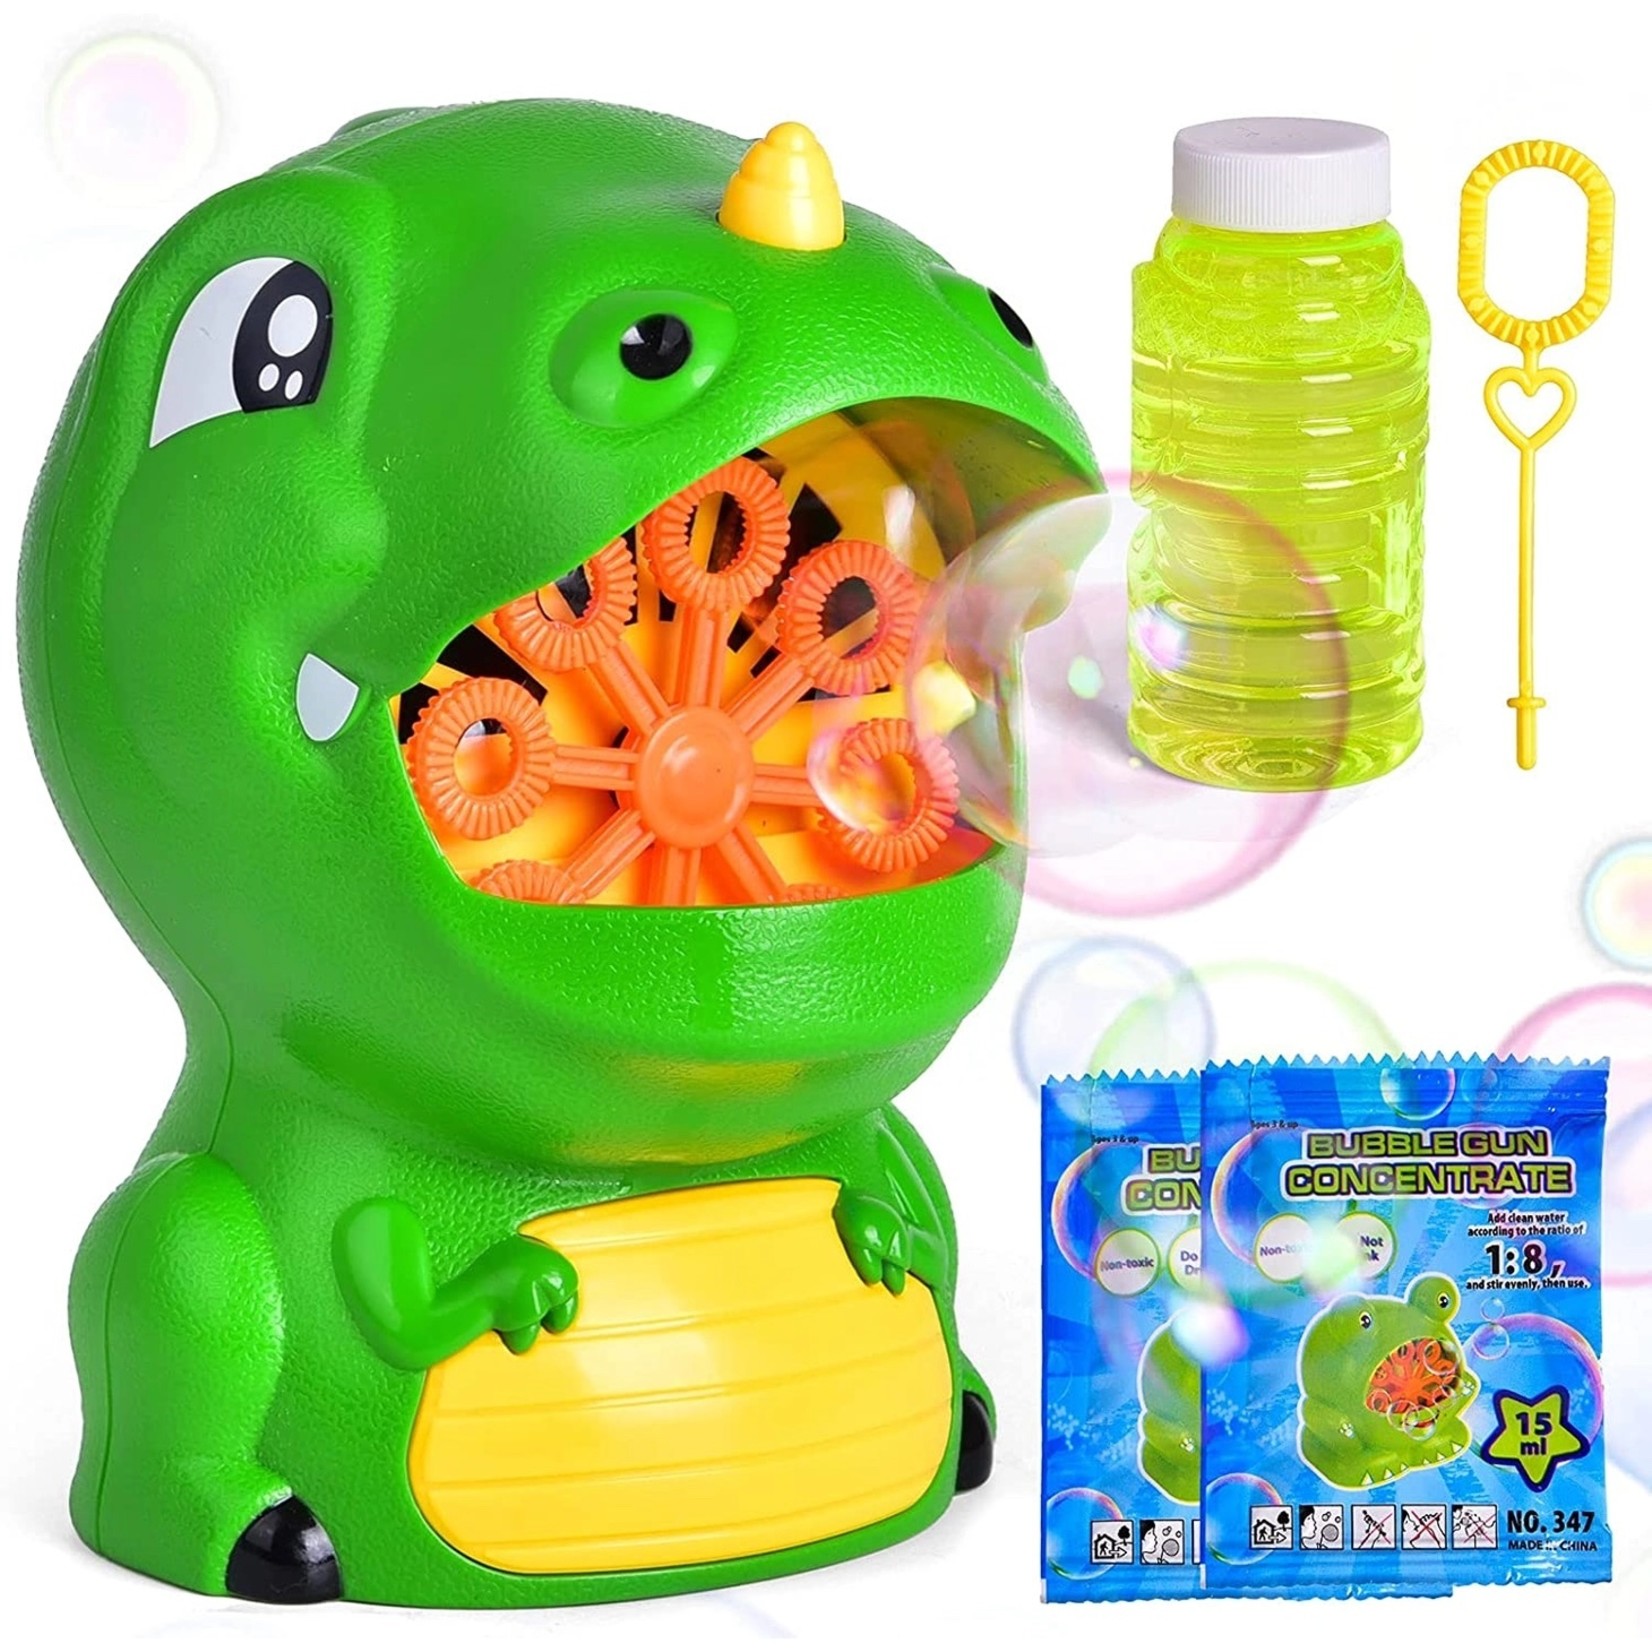 Fun Little Toys Dinosaur Automatic Bubble Blower